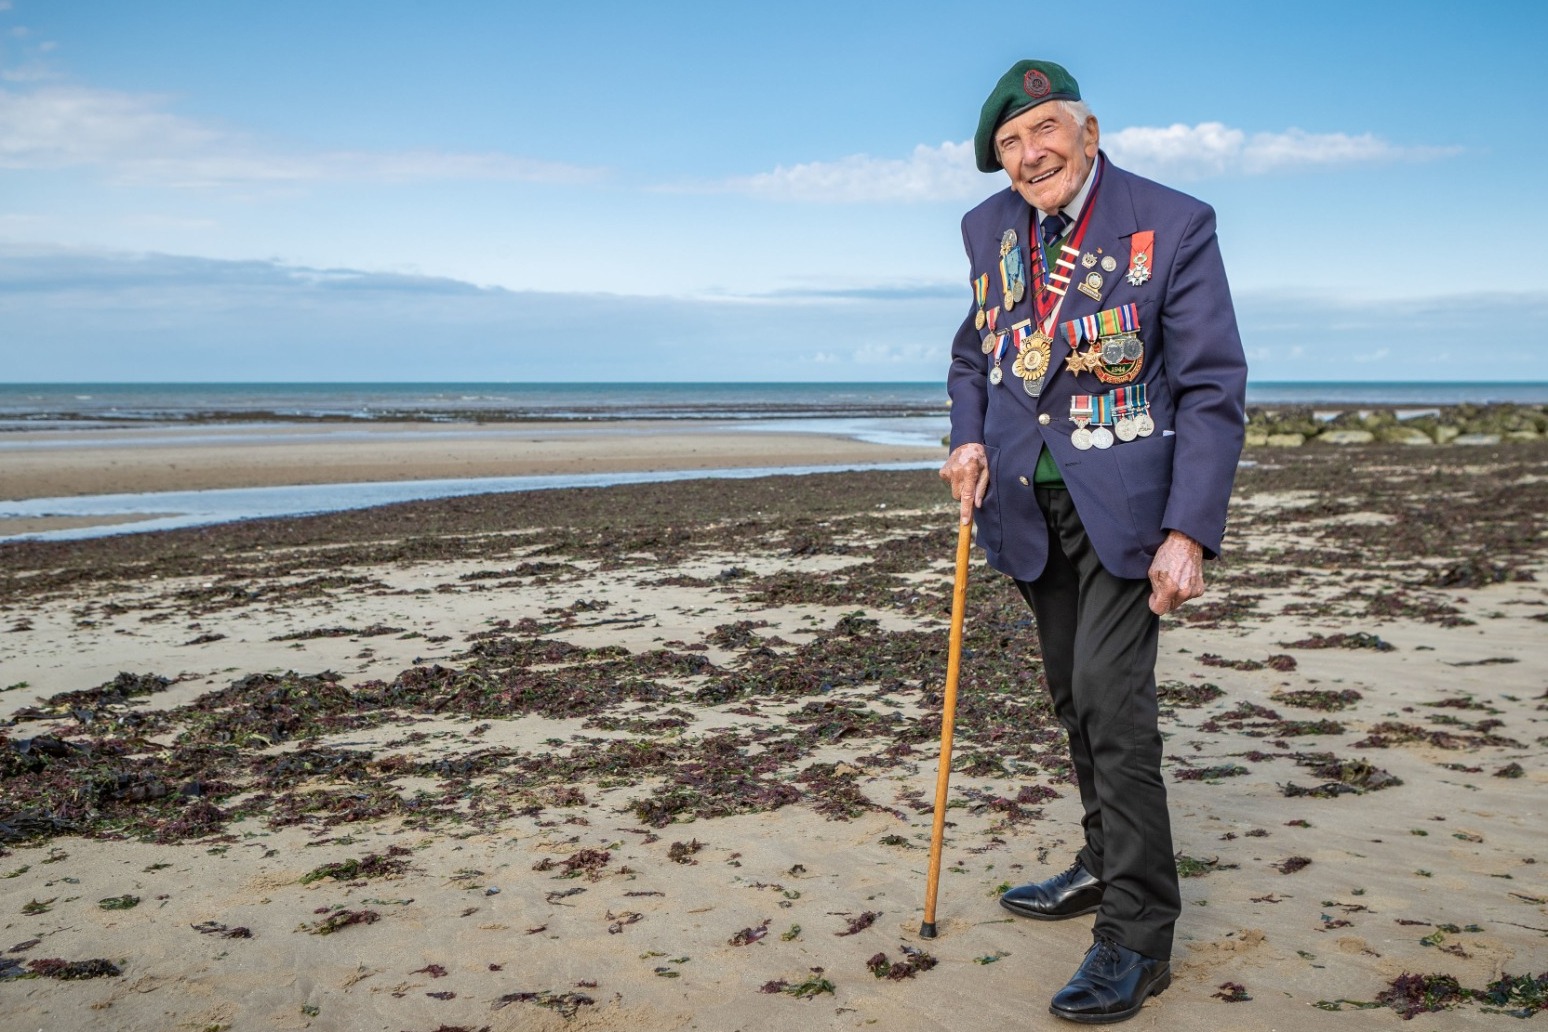 D Day veteran Harry Billinge dies aged 96 his family says